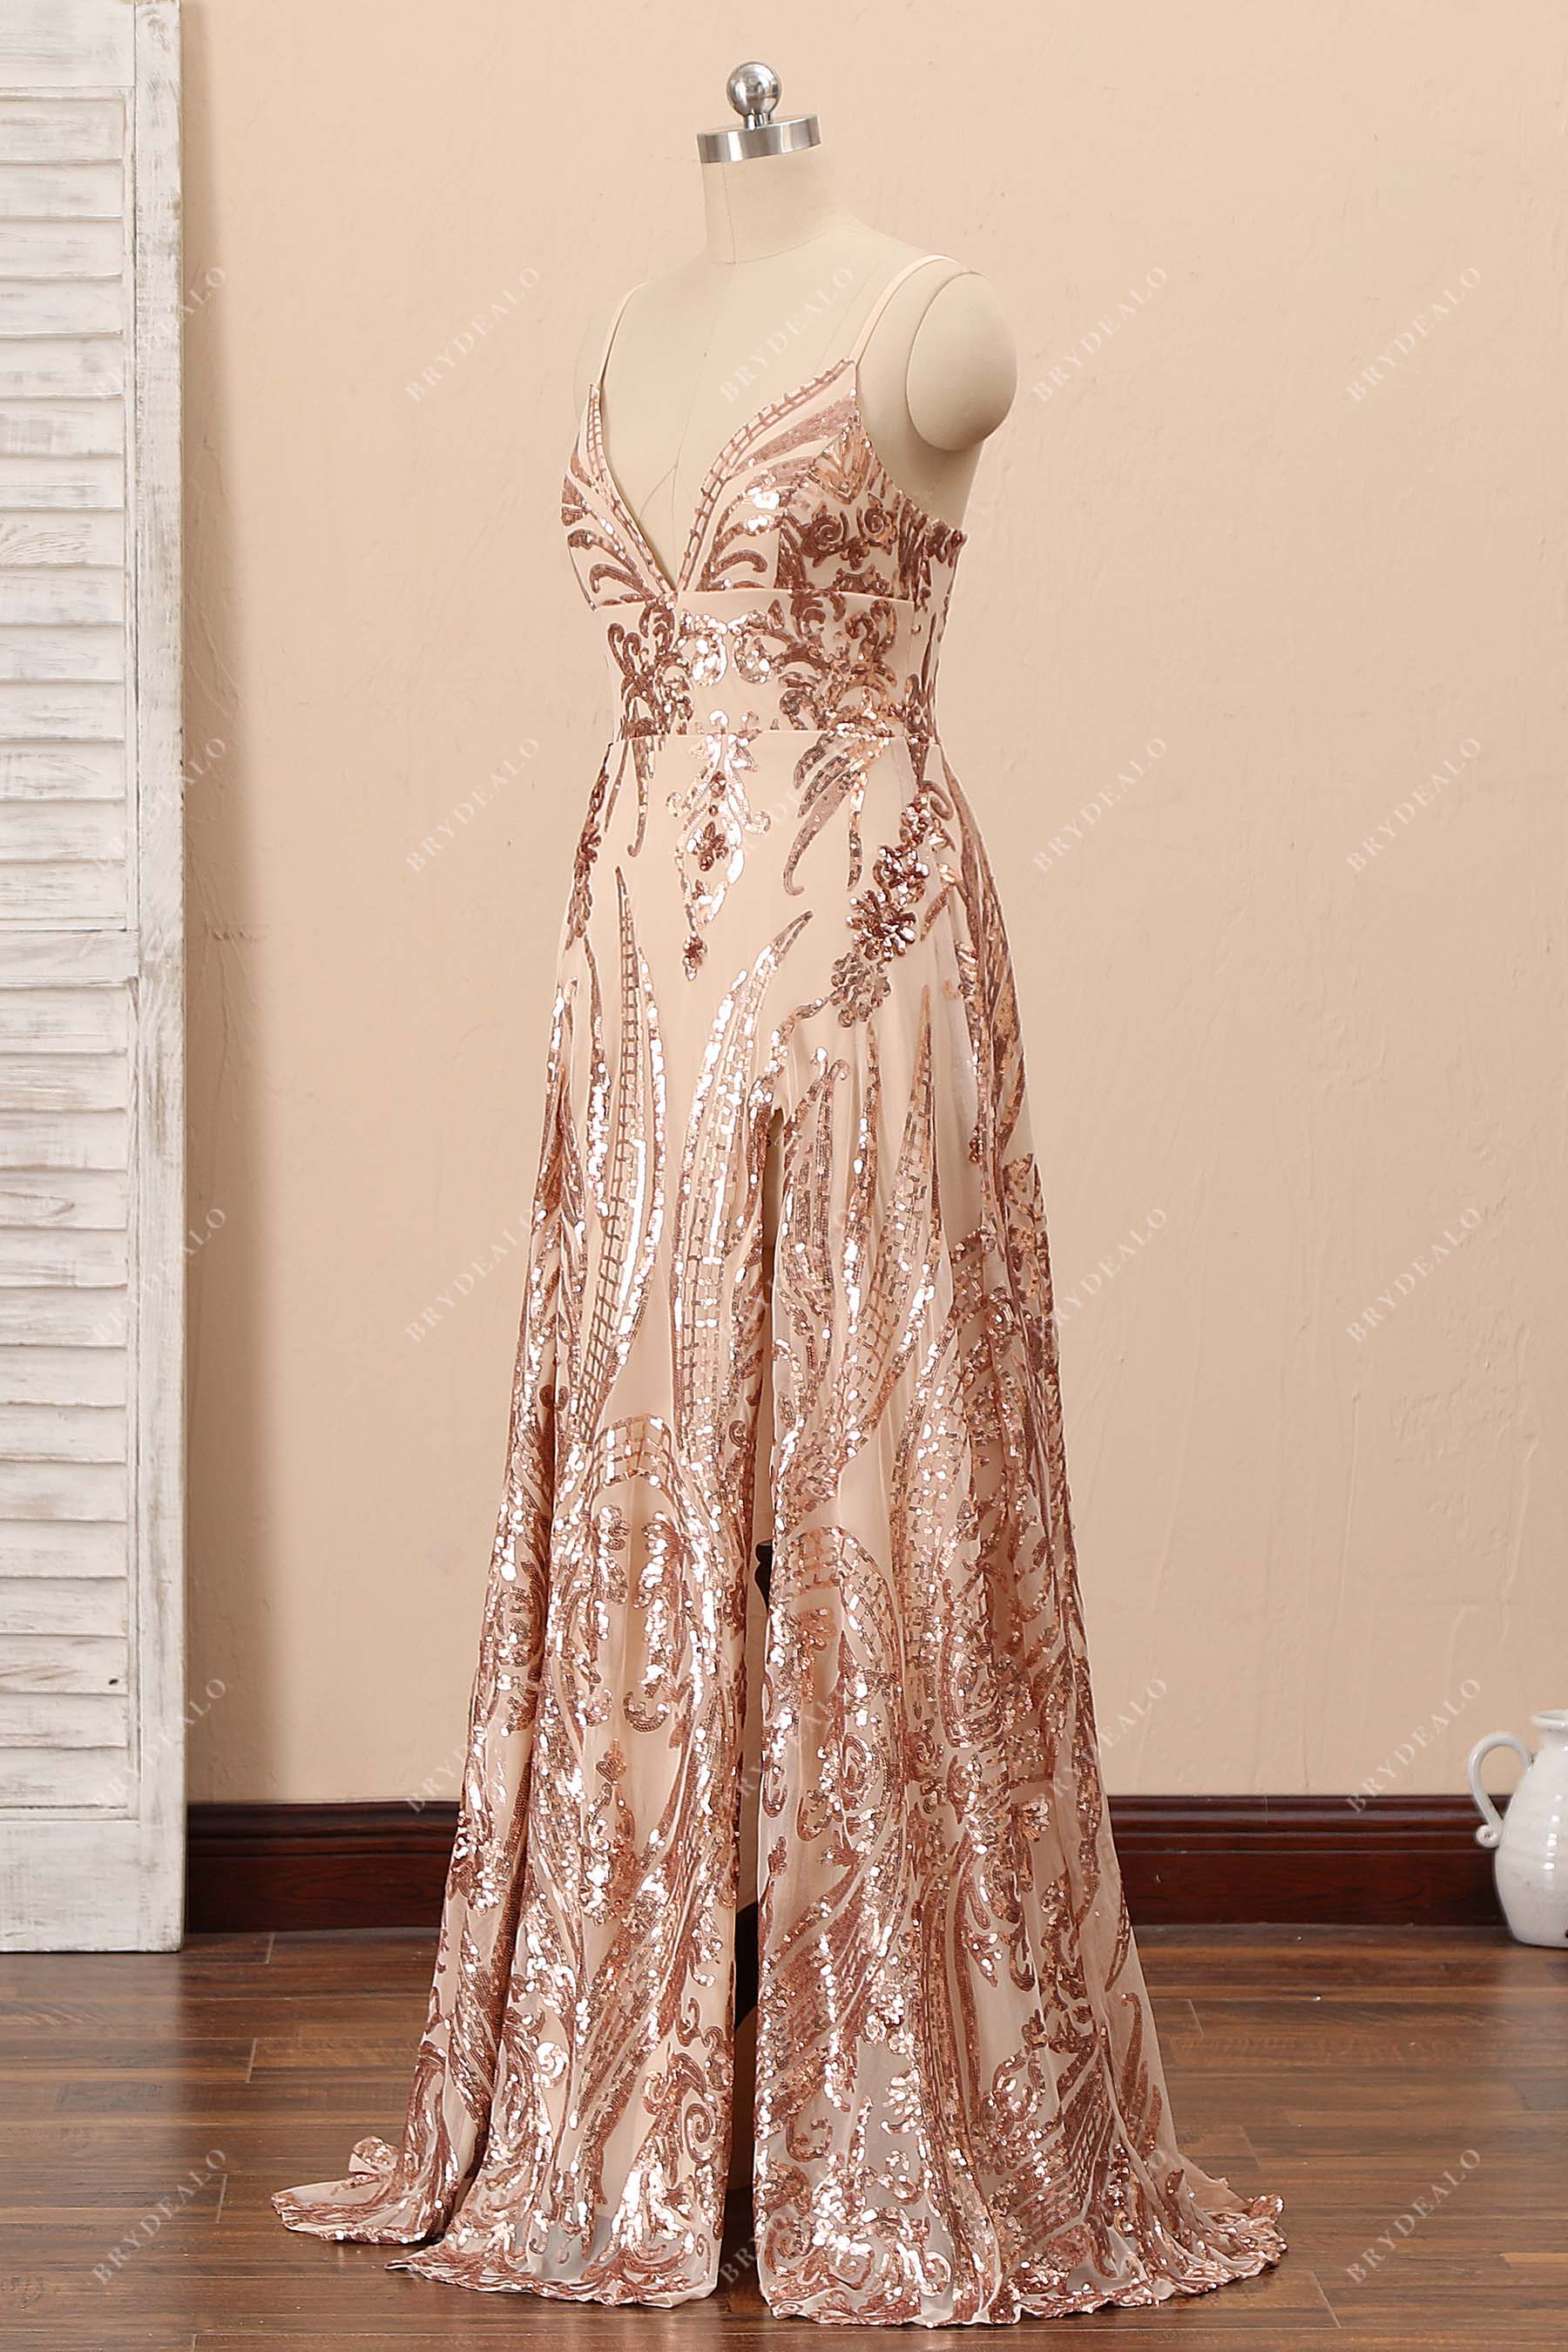 slit A-line empire waist prom dress